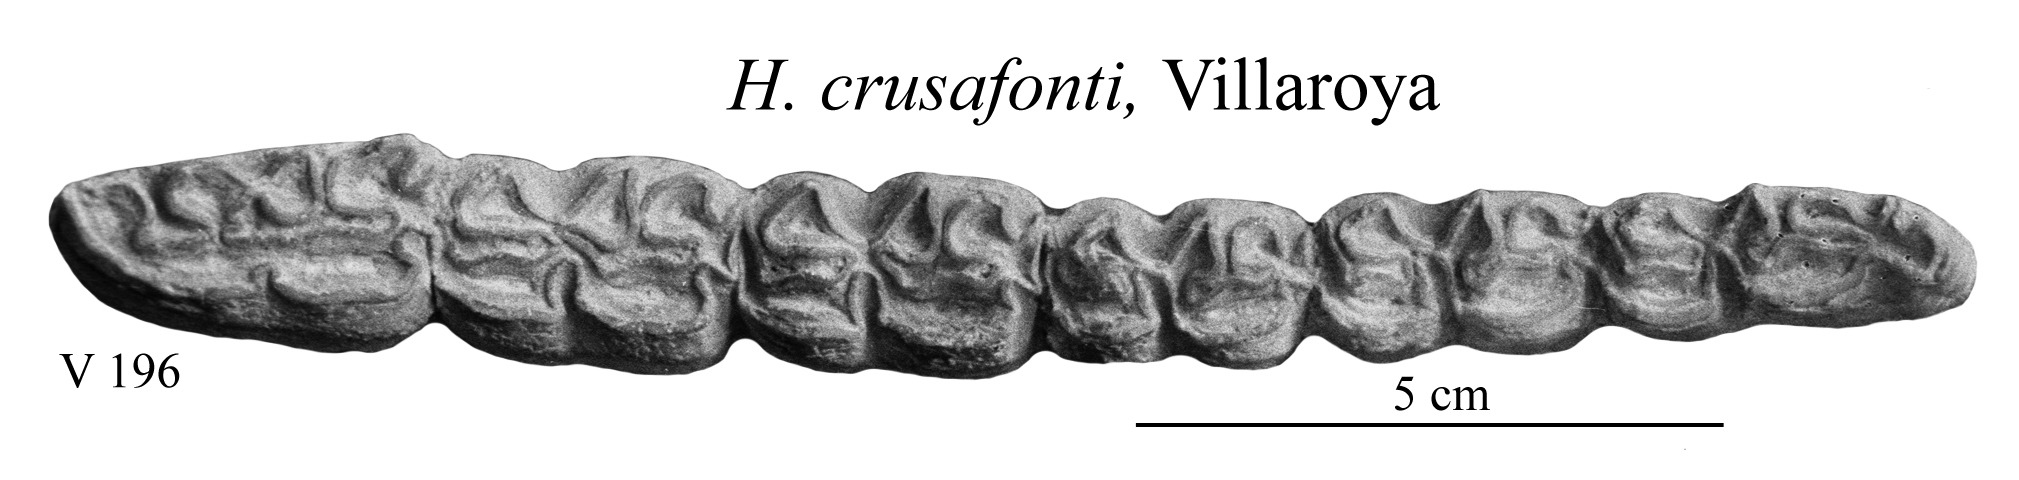 H. crusafonti, Lower cheek teeth